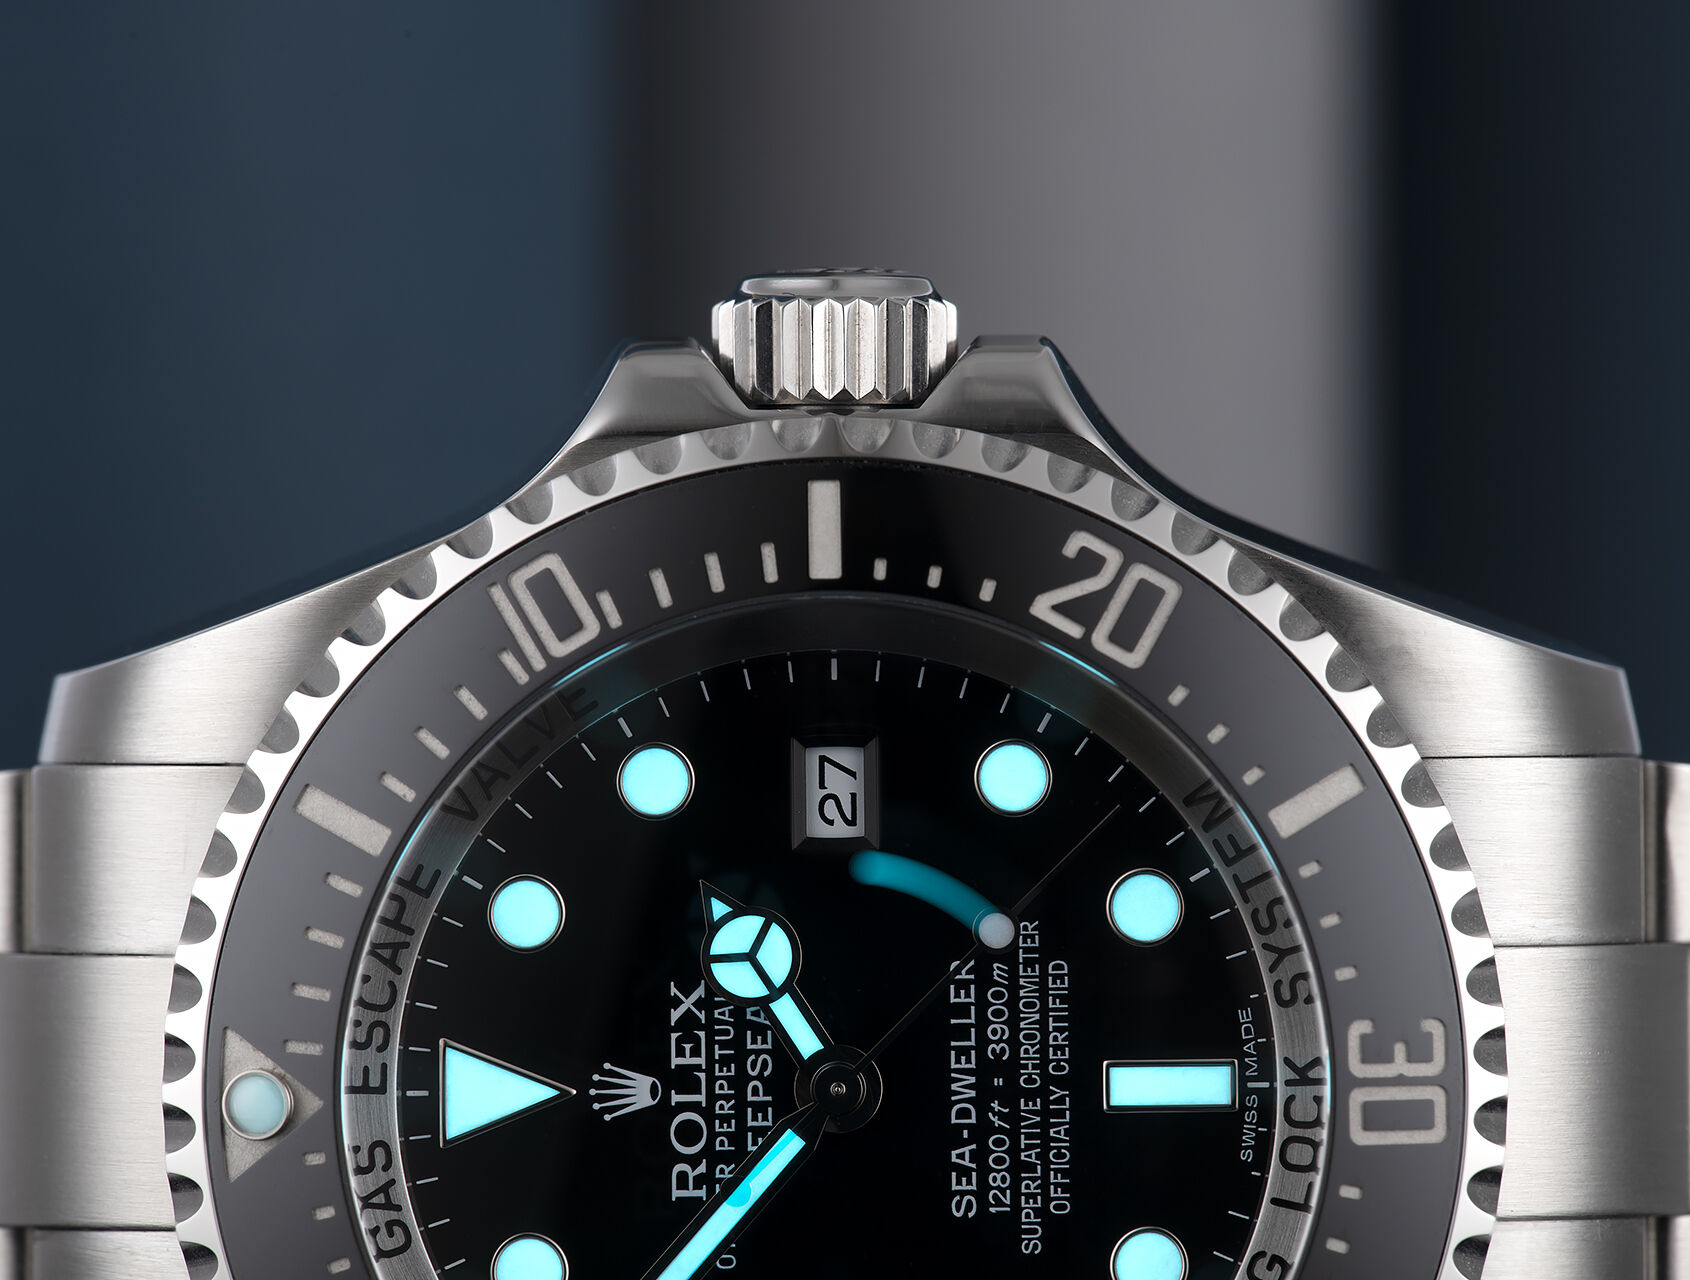 ref 116660 | 116660 - Box & Certificate | Rolex Sea-Dweller Deepsea